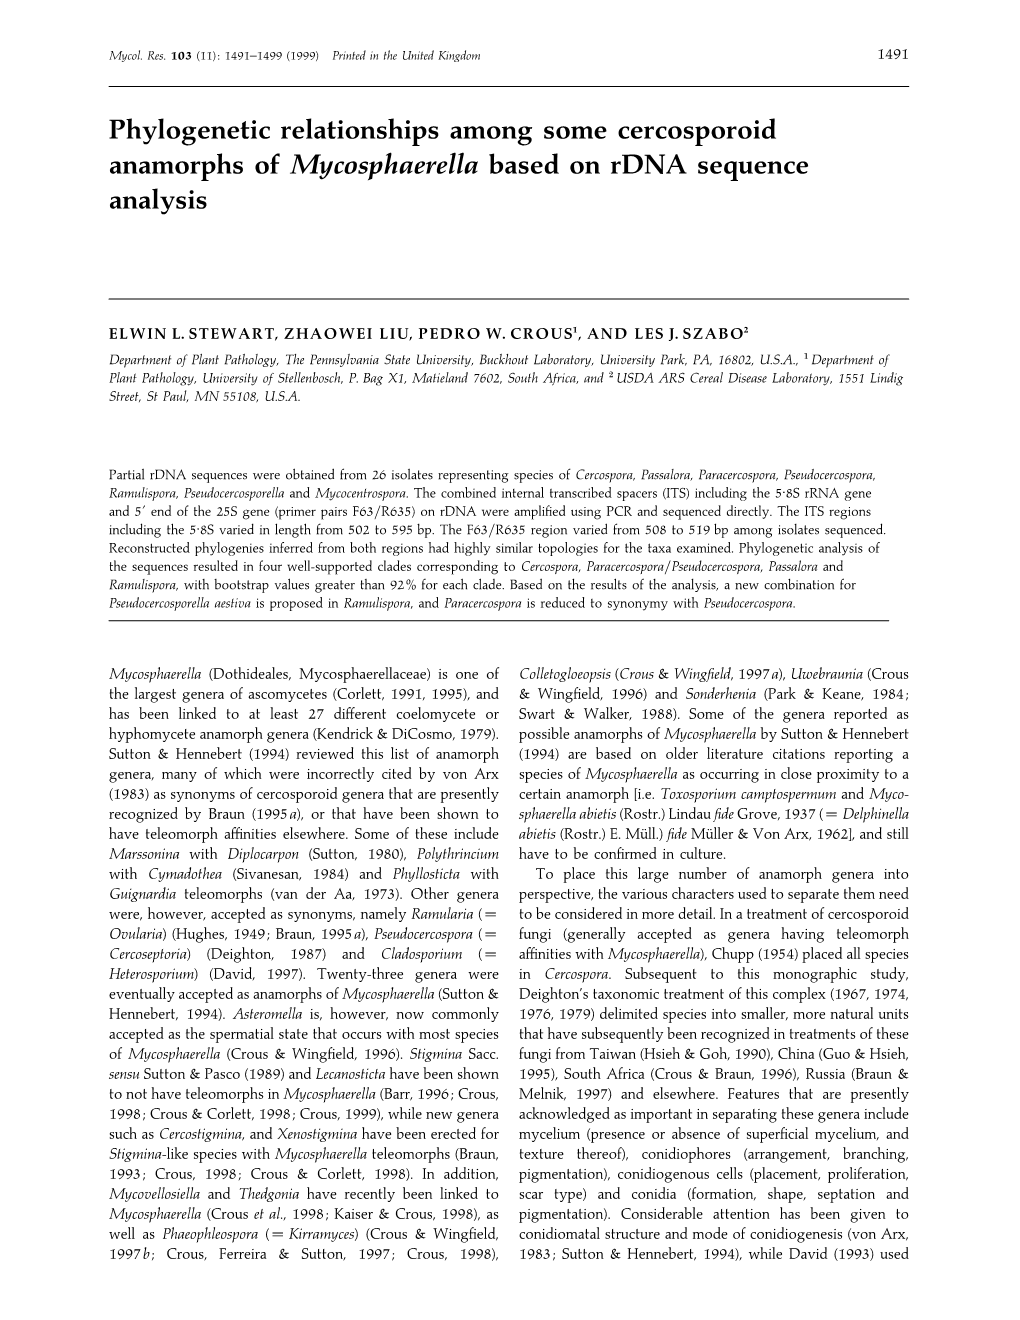 Phylogenetic Relationships Among Some Cercosporoid Anamorphs of Mycosphaerella Based on Rdna Sequence Analysis